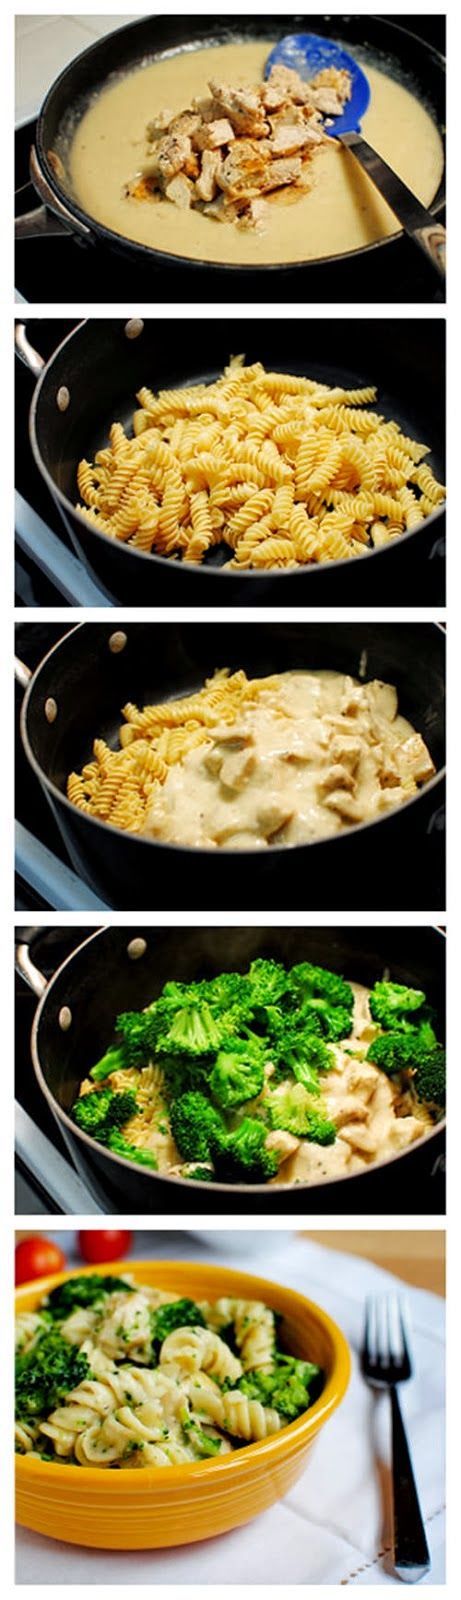 Skinny Chicken Broccoli Alfredo Recipe | Sauce is a greek yogurt/low-fat milk mixture | Make with whole wheat pasta